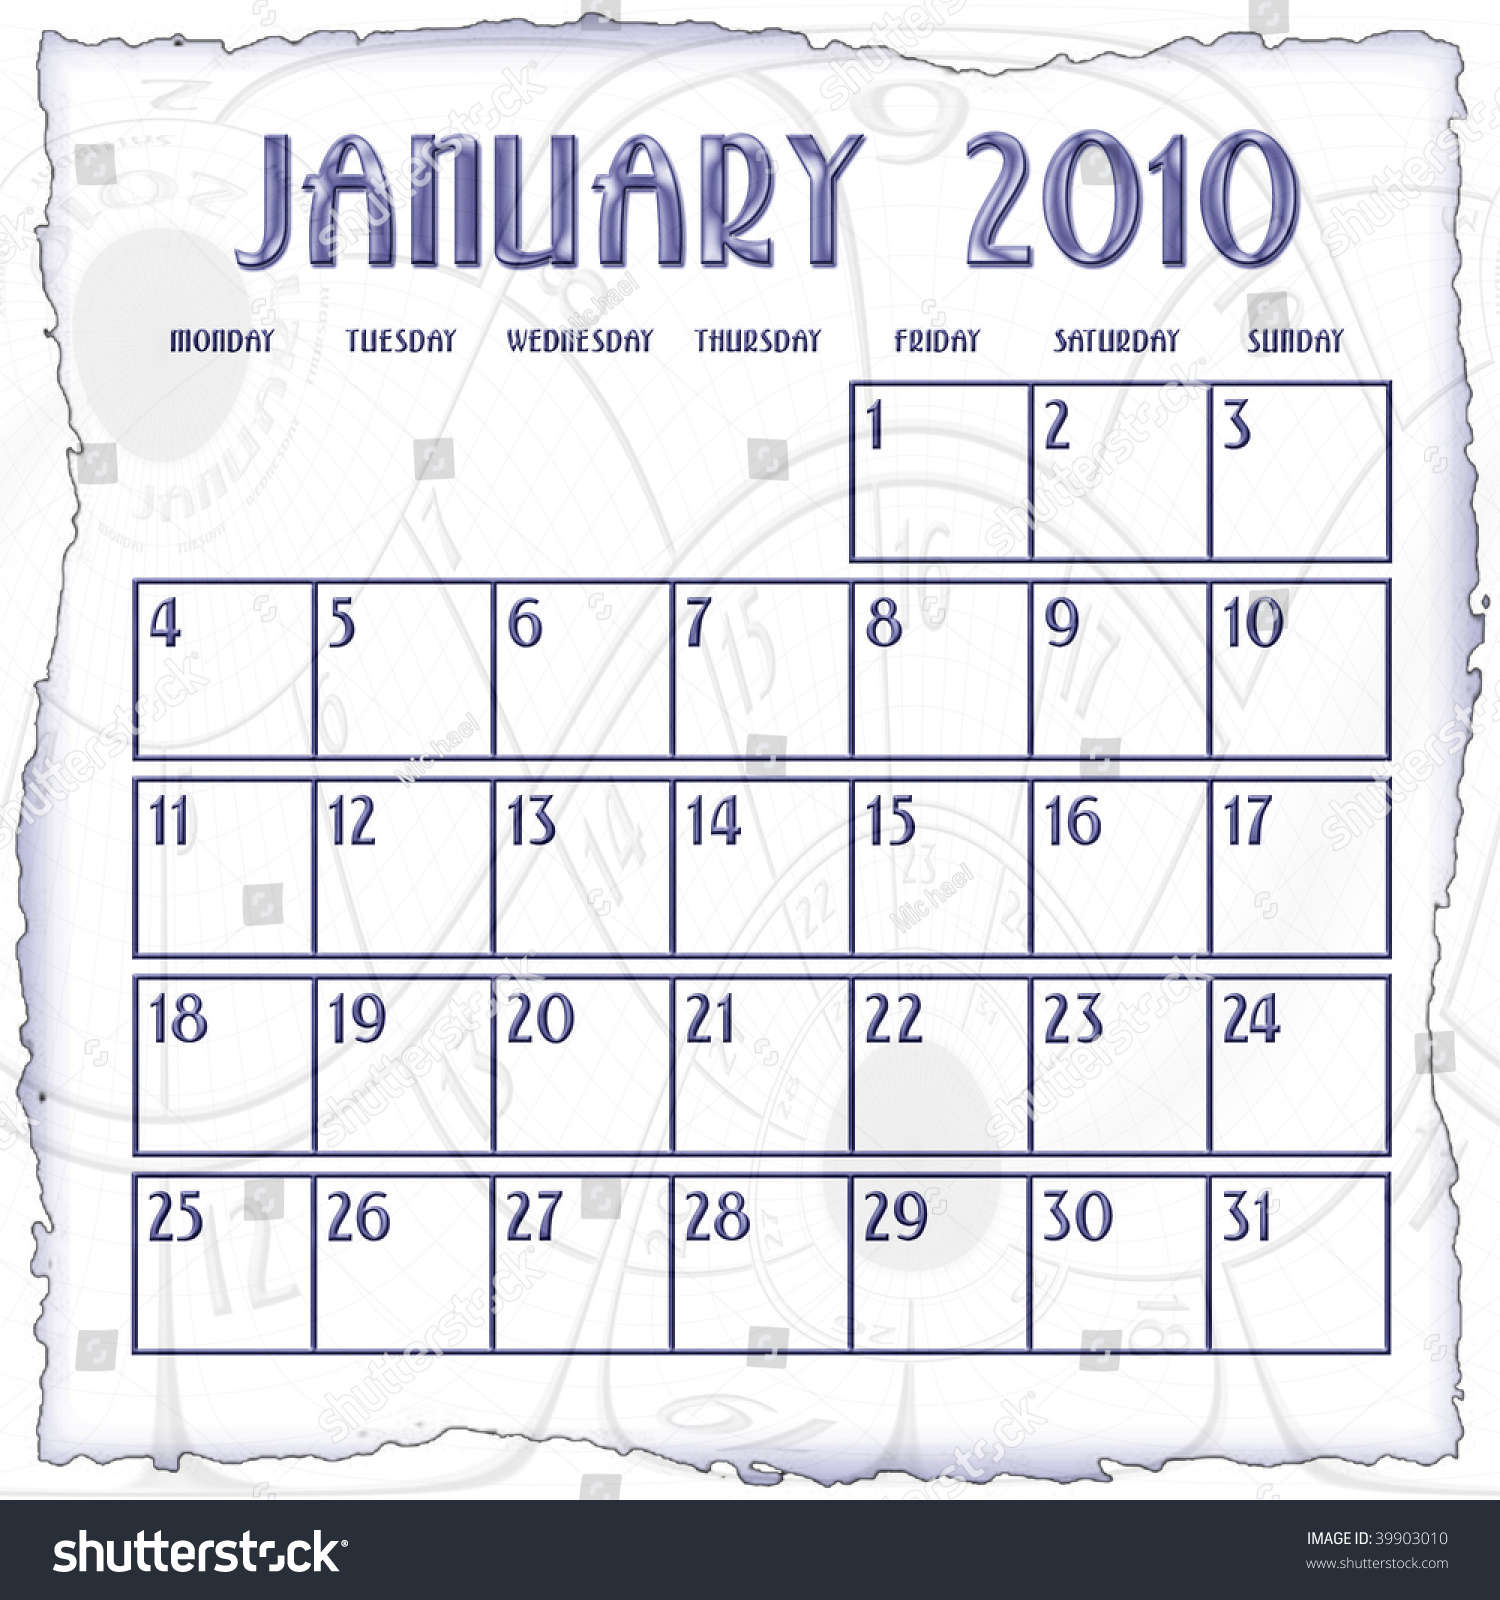 3d January 2010 Agenda Calendar Stock Photo 39903010 : Shutterstock